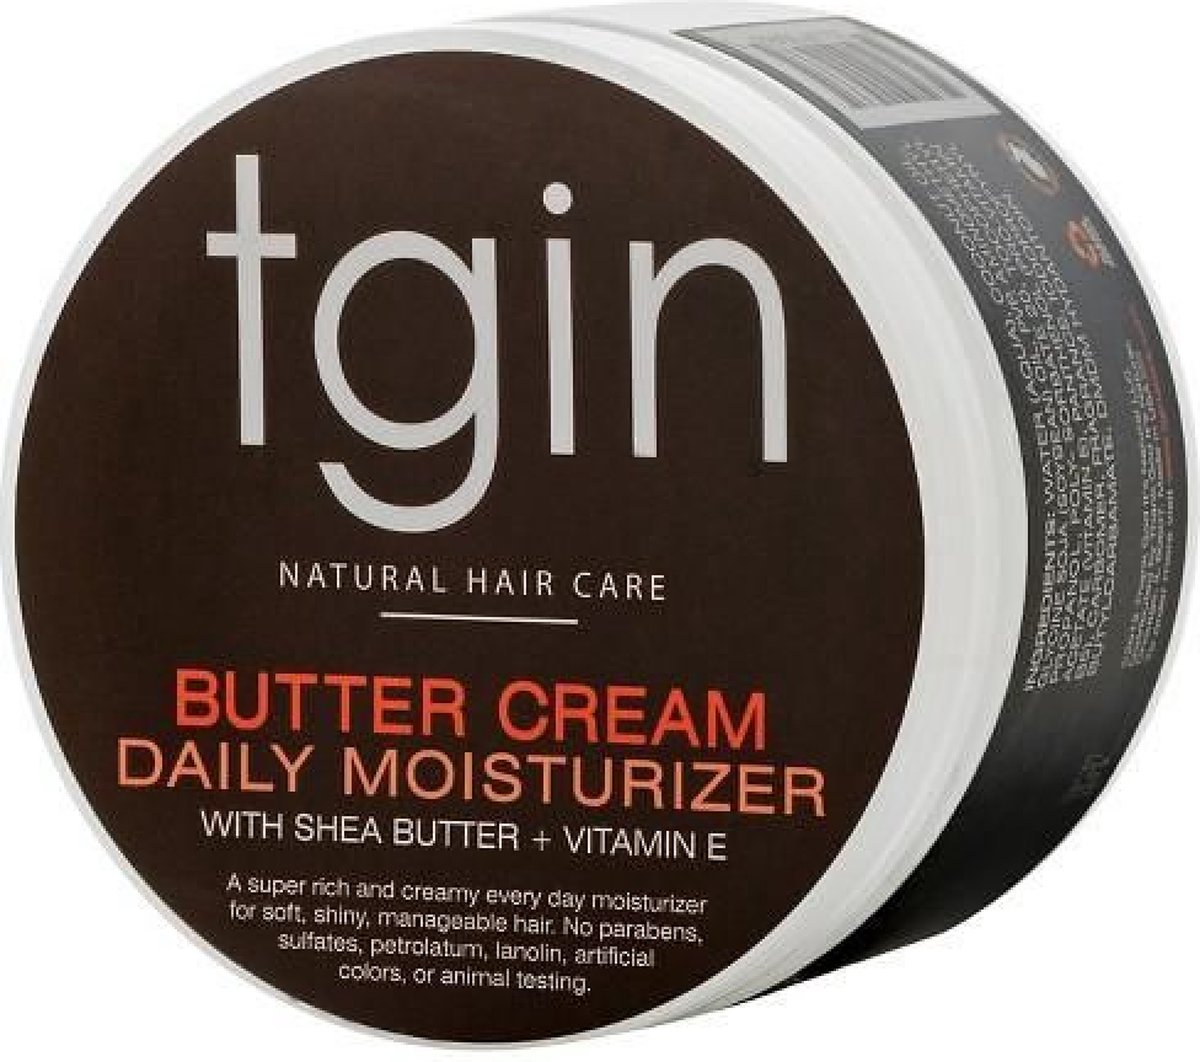 Tgin Butter Cream Daily Moisturizer 340g